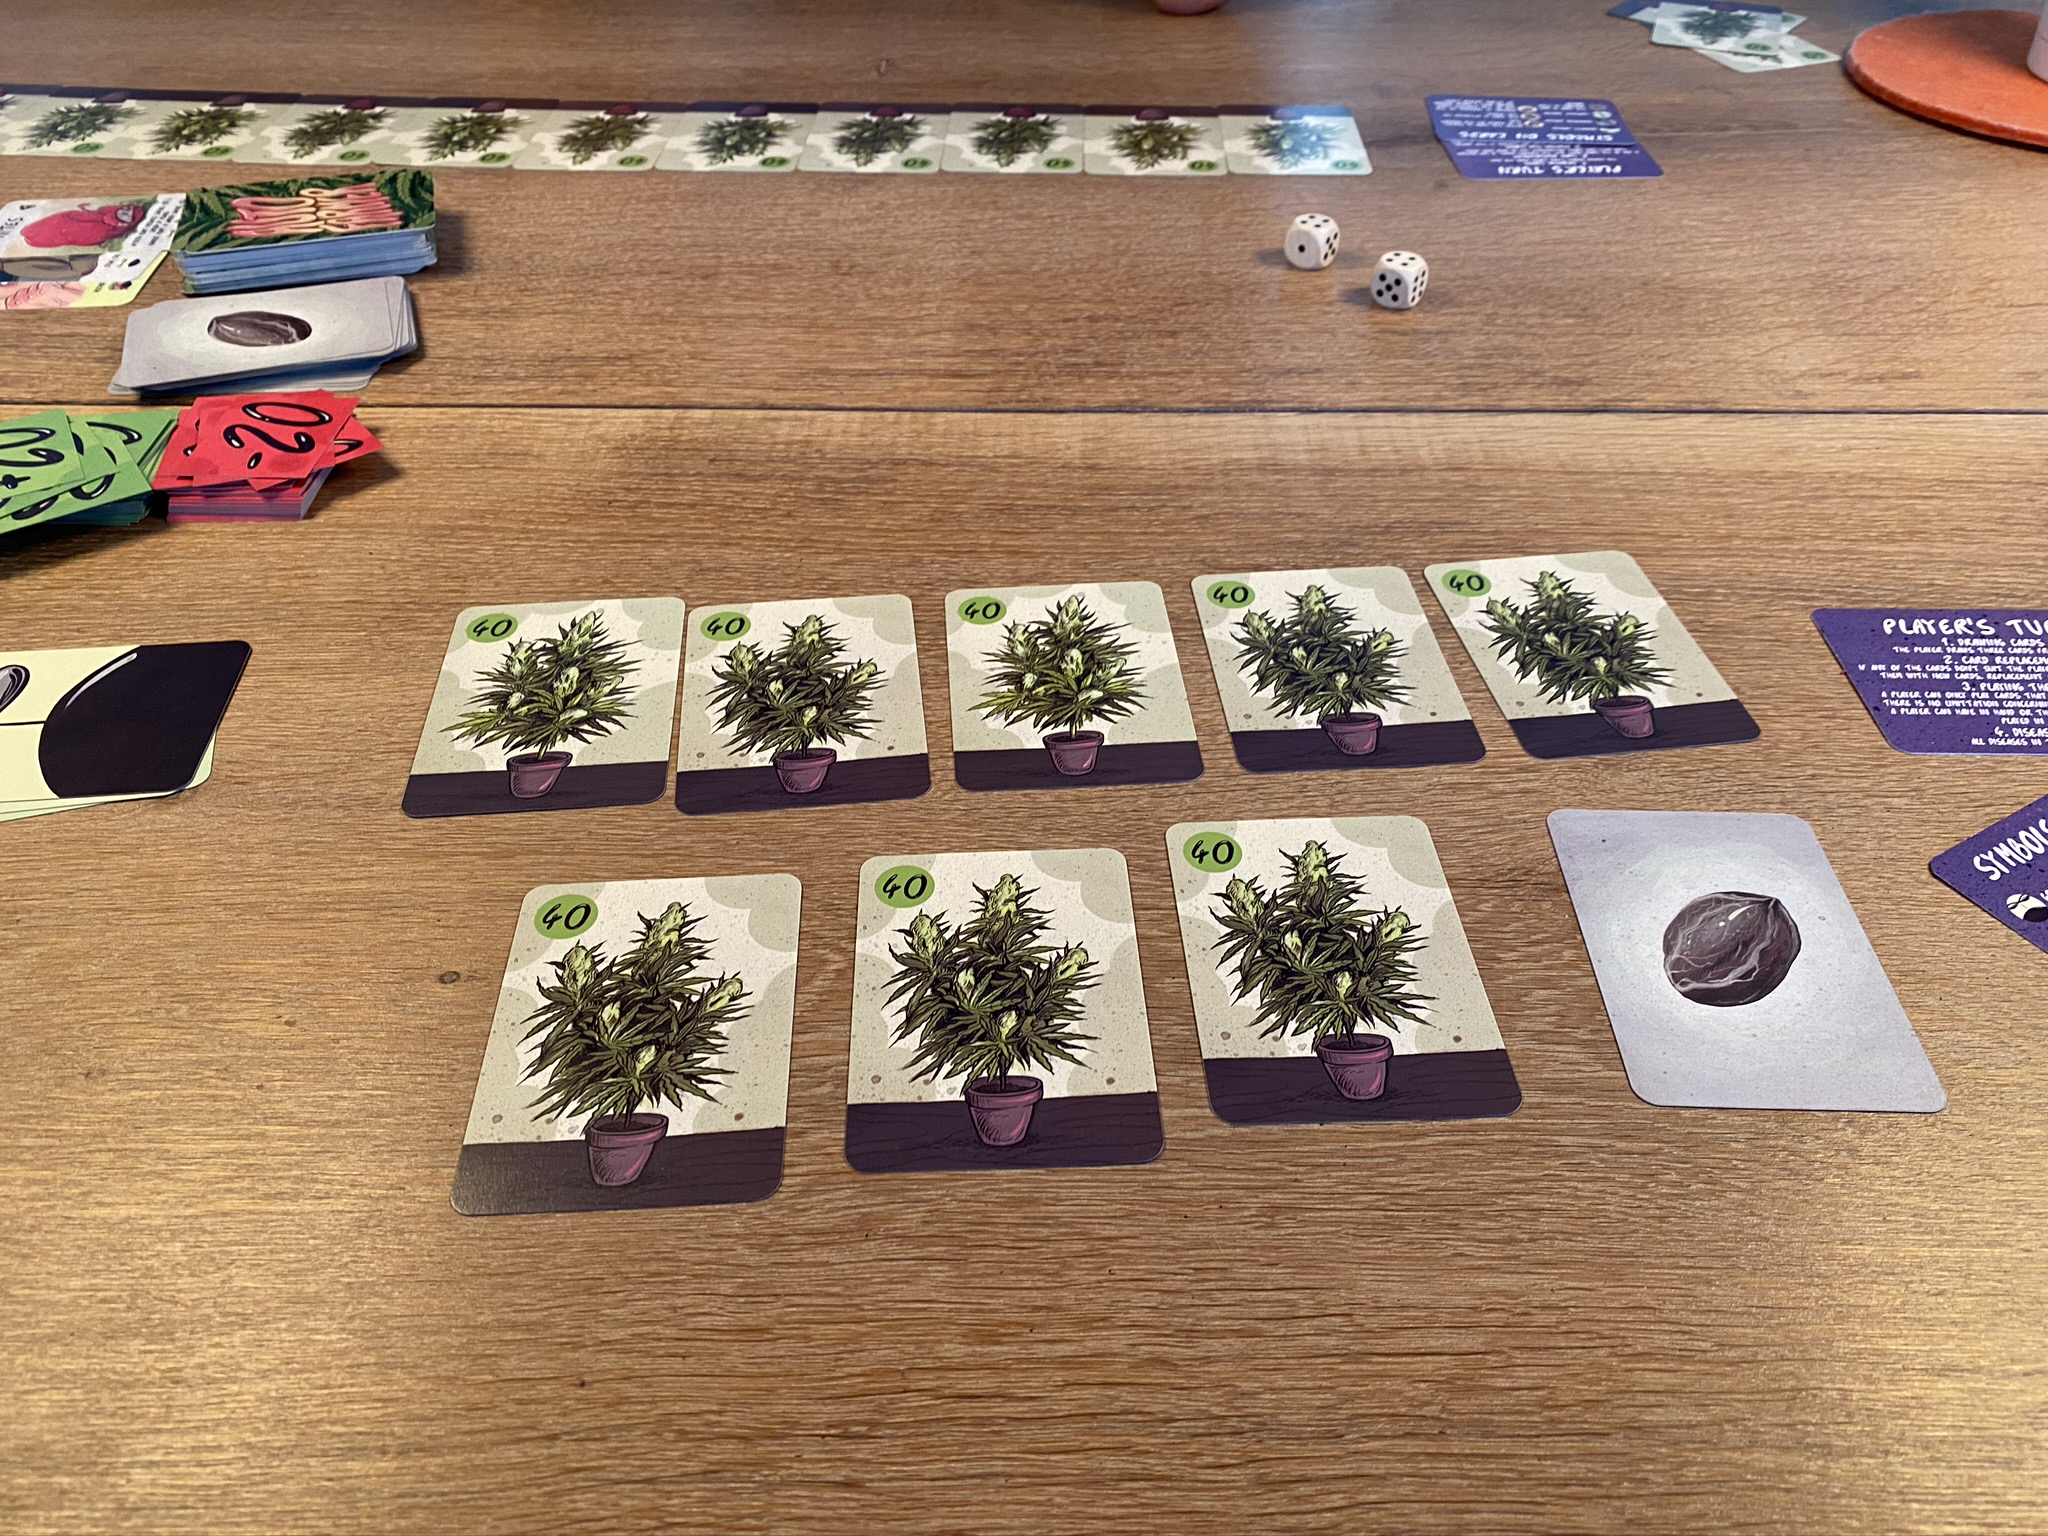 2 player setup - lucky bunch of plants